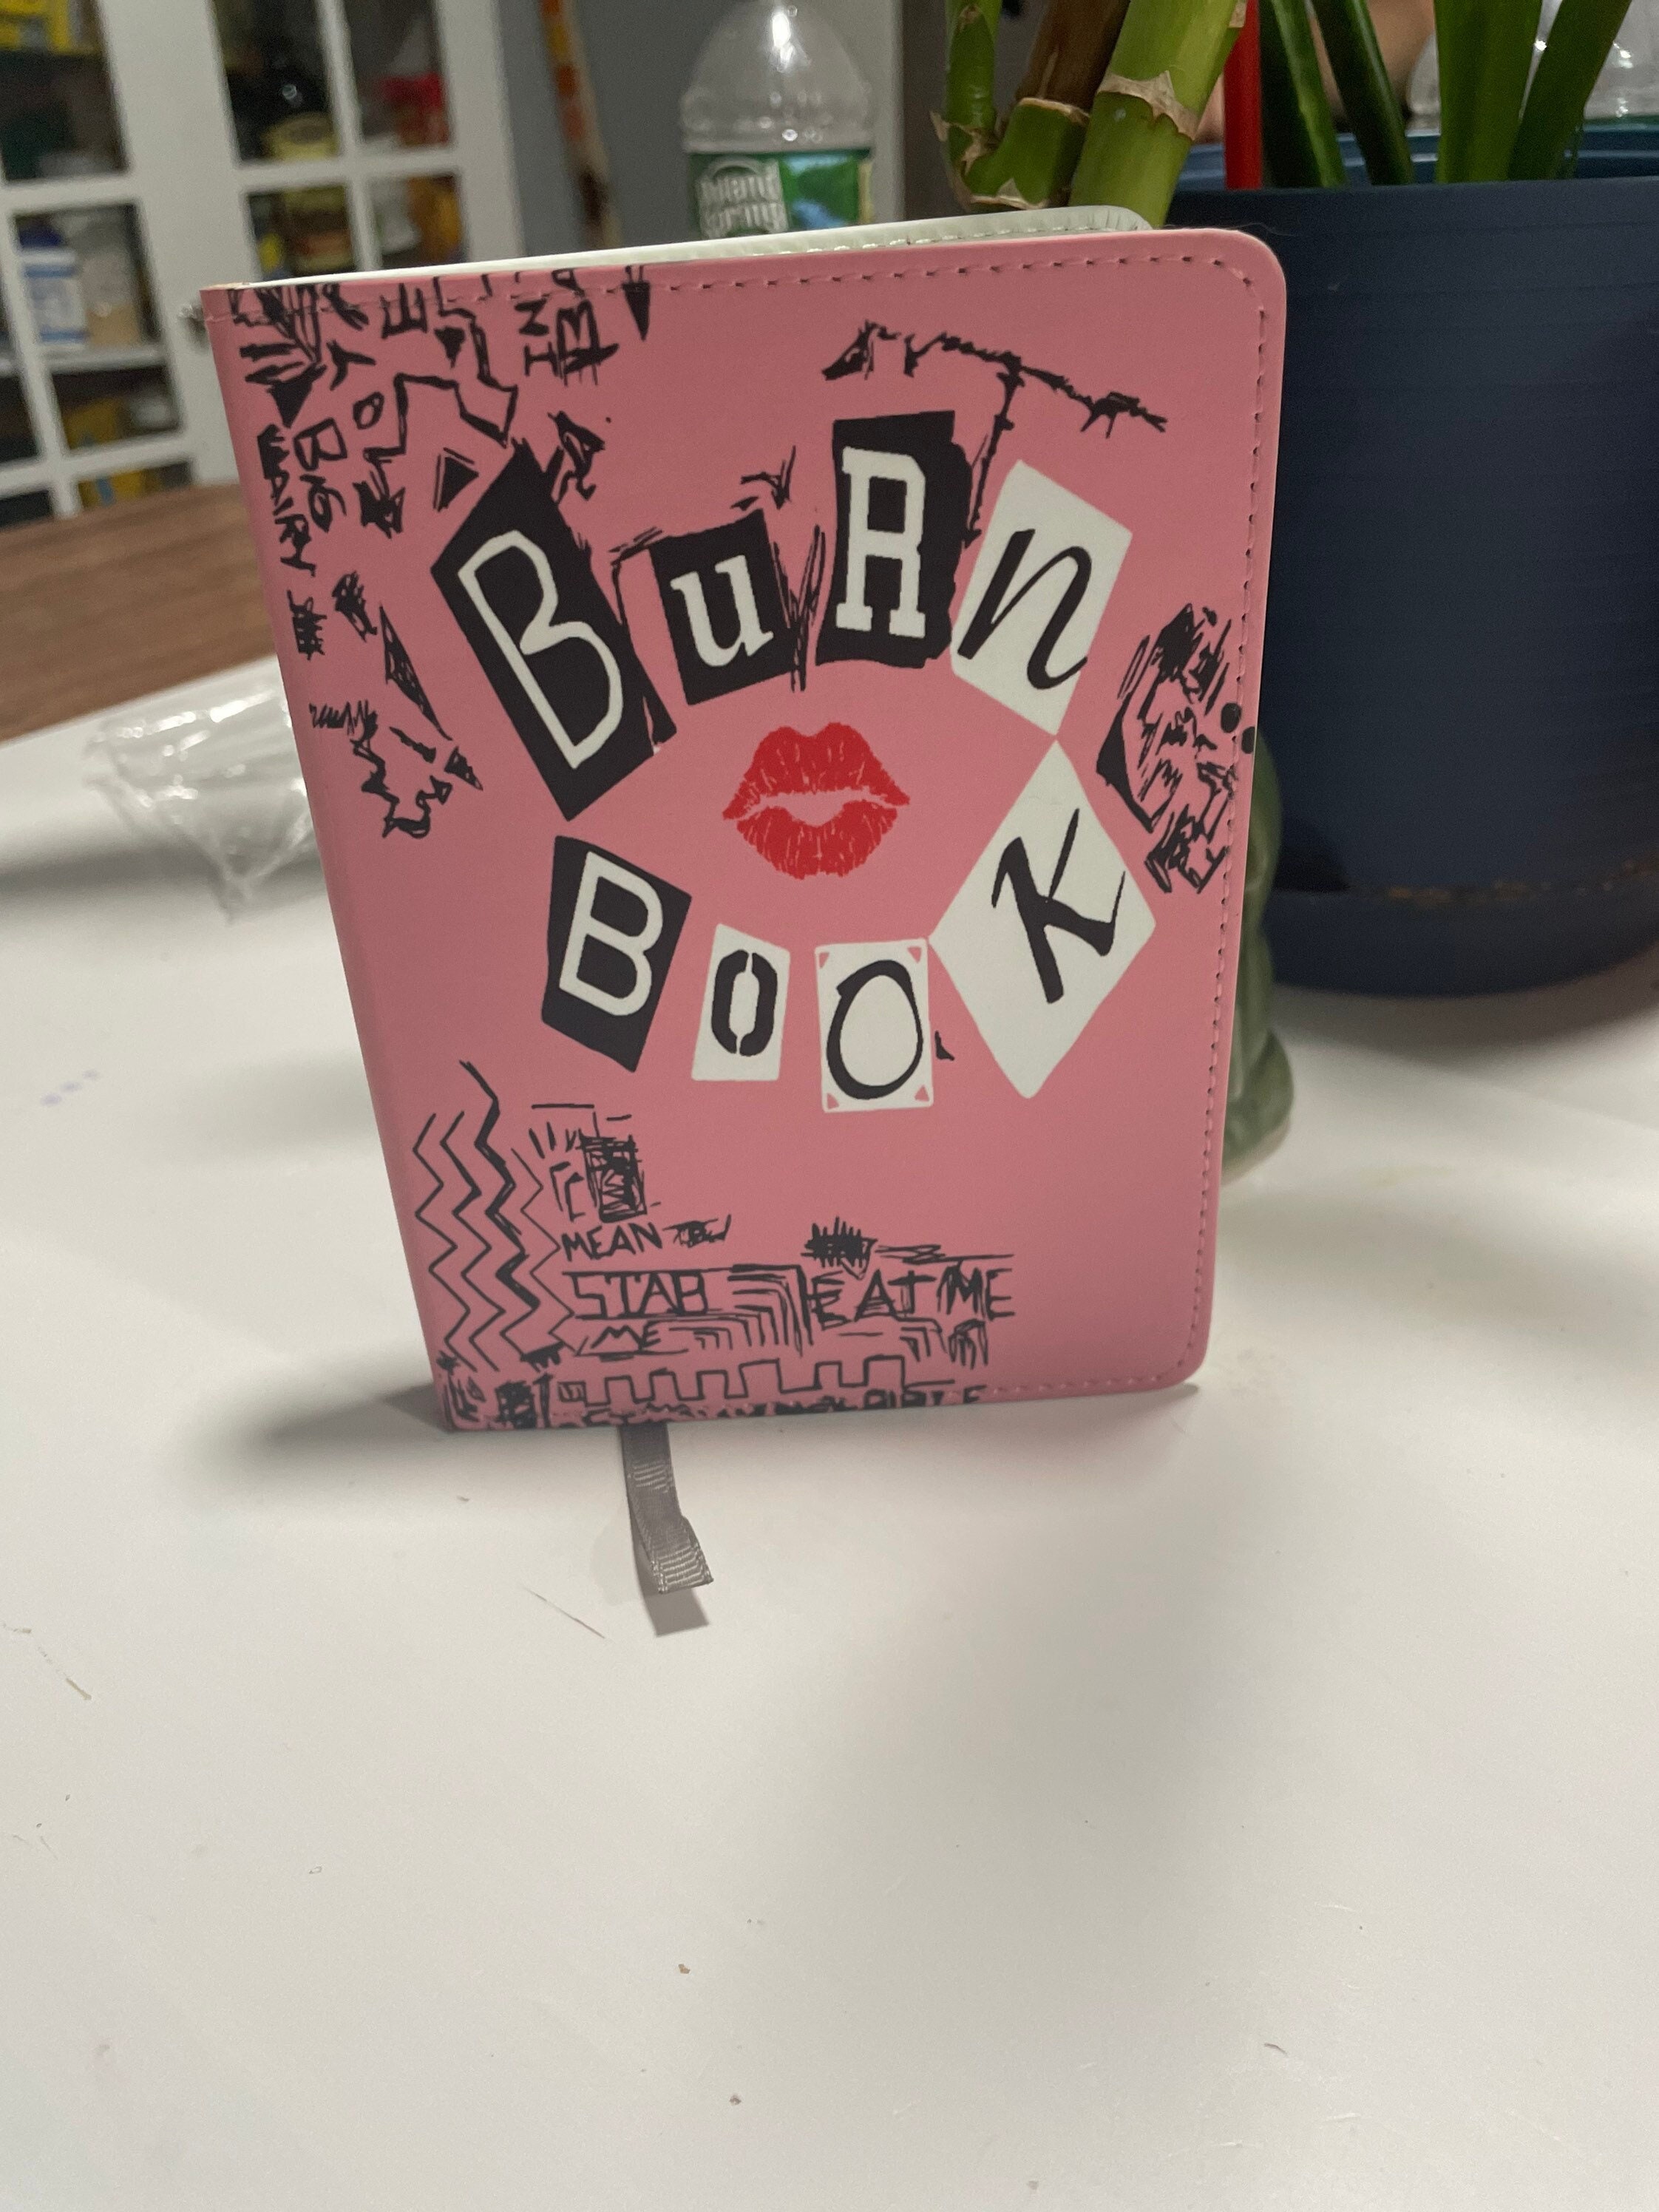 The Bachelorette Burn Book: Mean Girls inspired, burn book, Bachelorette  game, guest gook, photo book: Press, Pop Cult: : Books